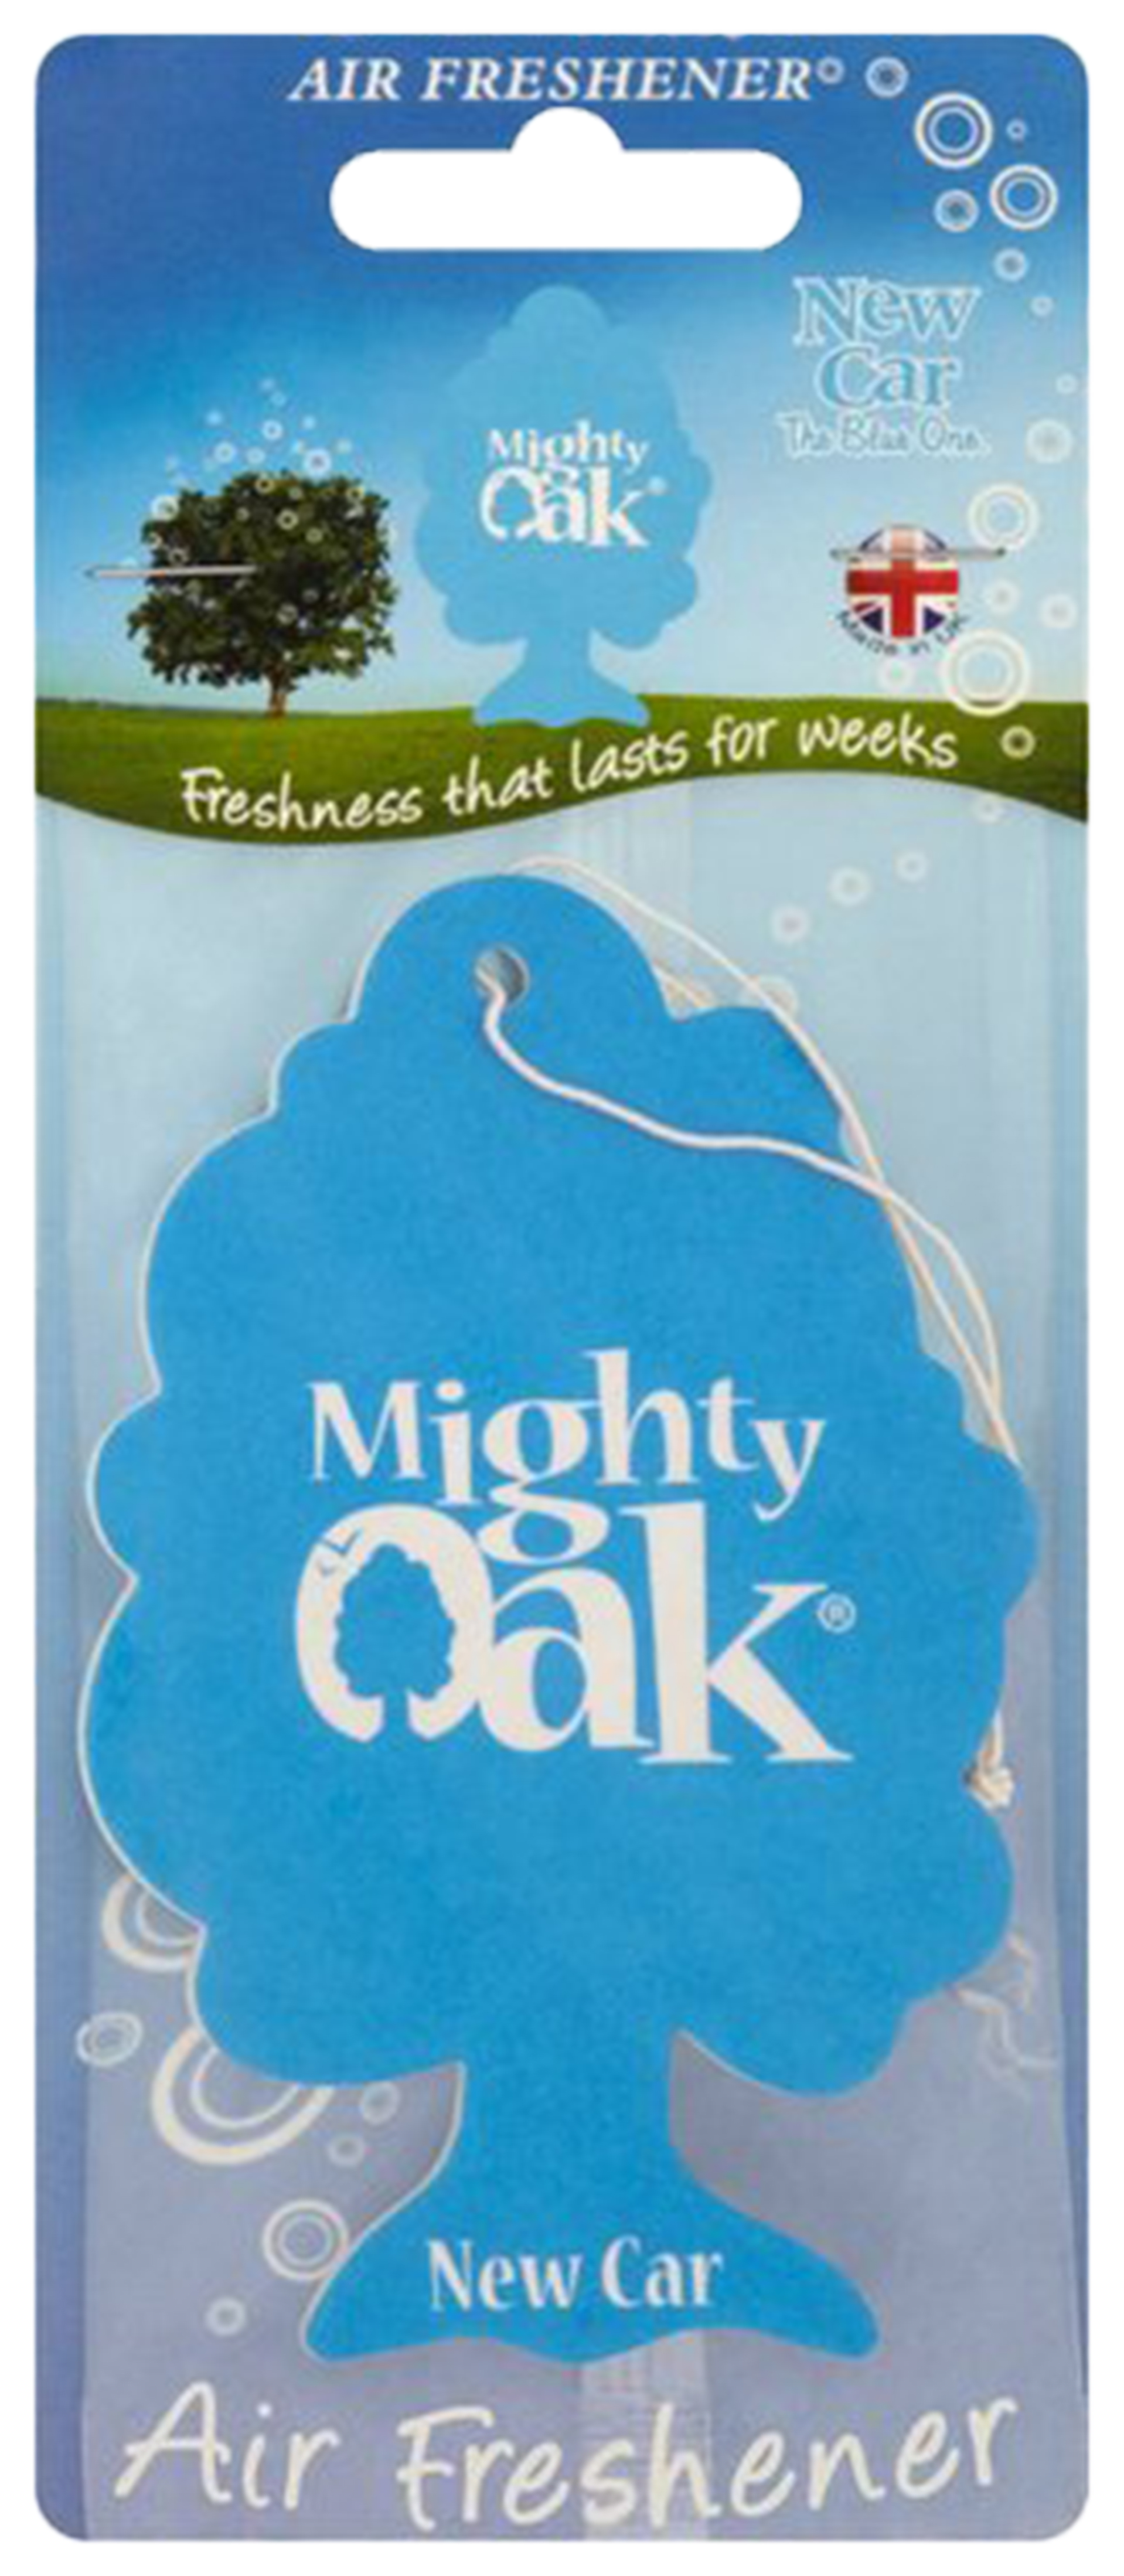 Mighty Oak MNC001 Single Carded Air Freshener - New Car